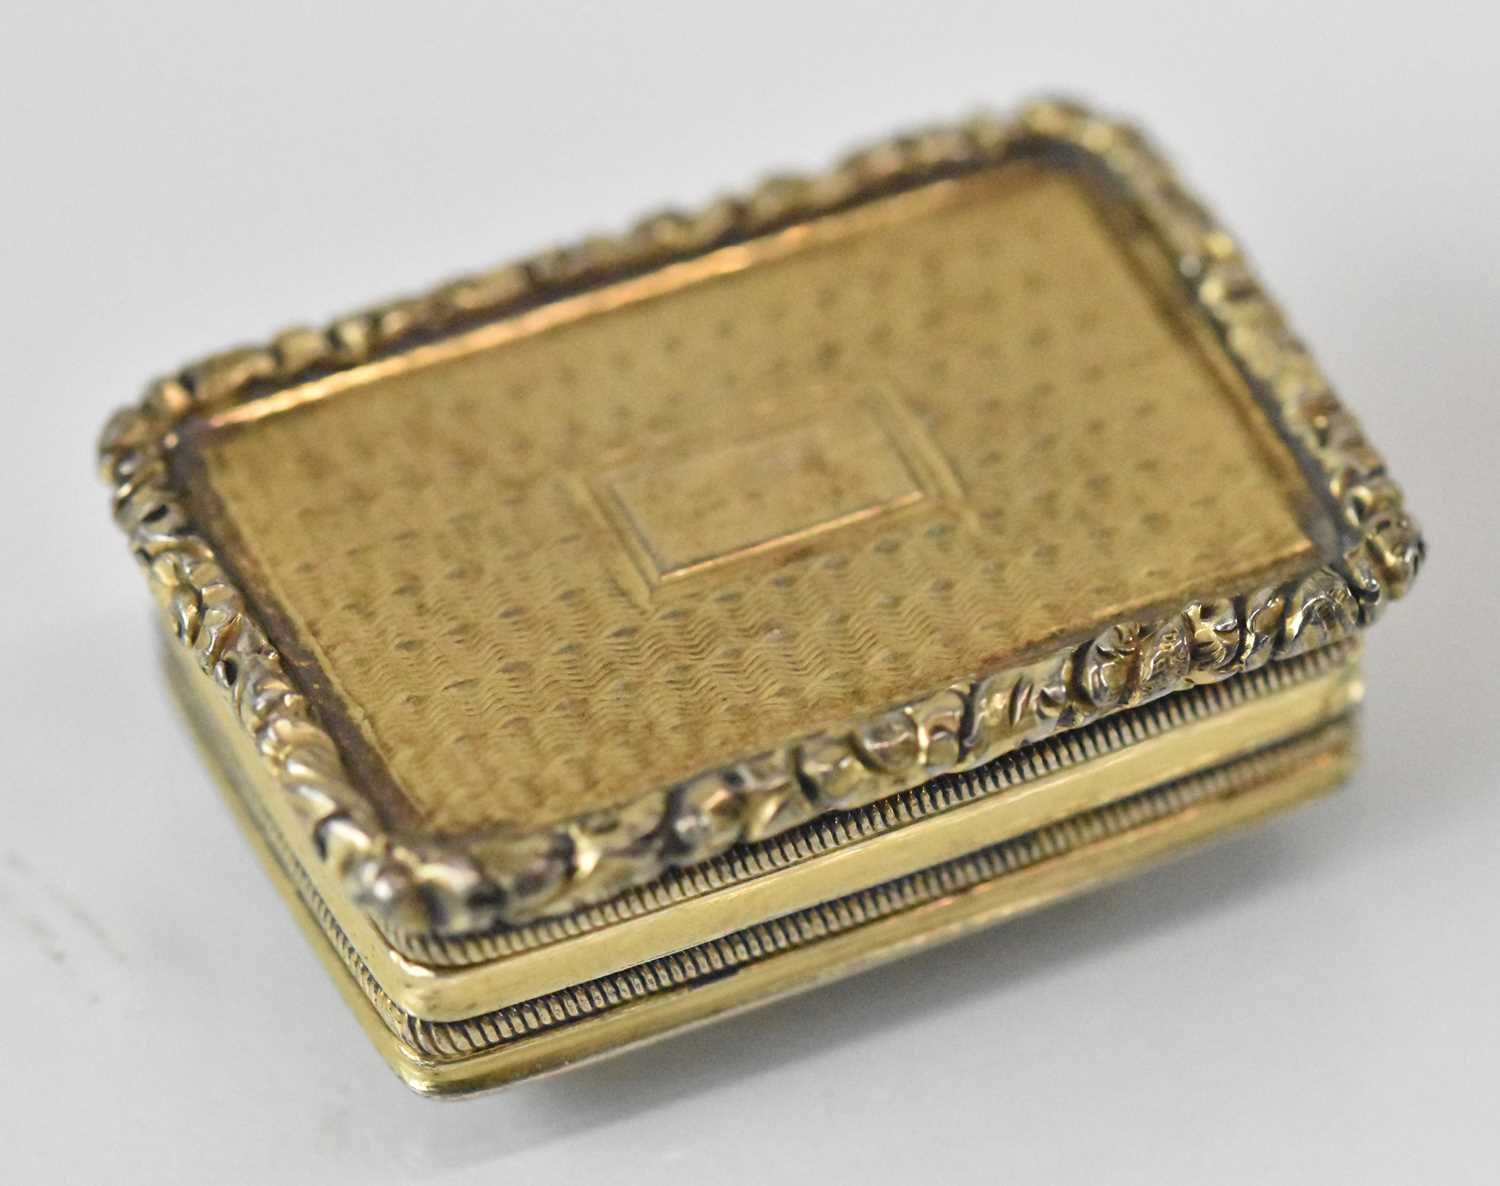 LEDSAM, VALE & WHEELER; a George IV hallmarked silver gilt vinaigrette with pierced interior,